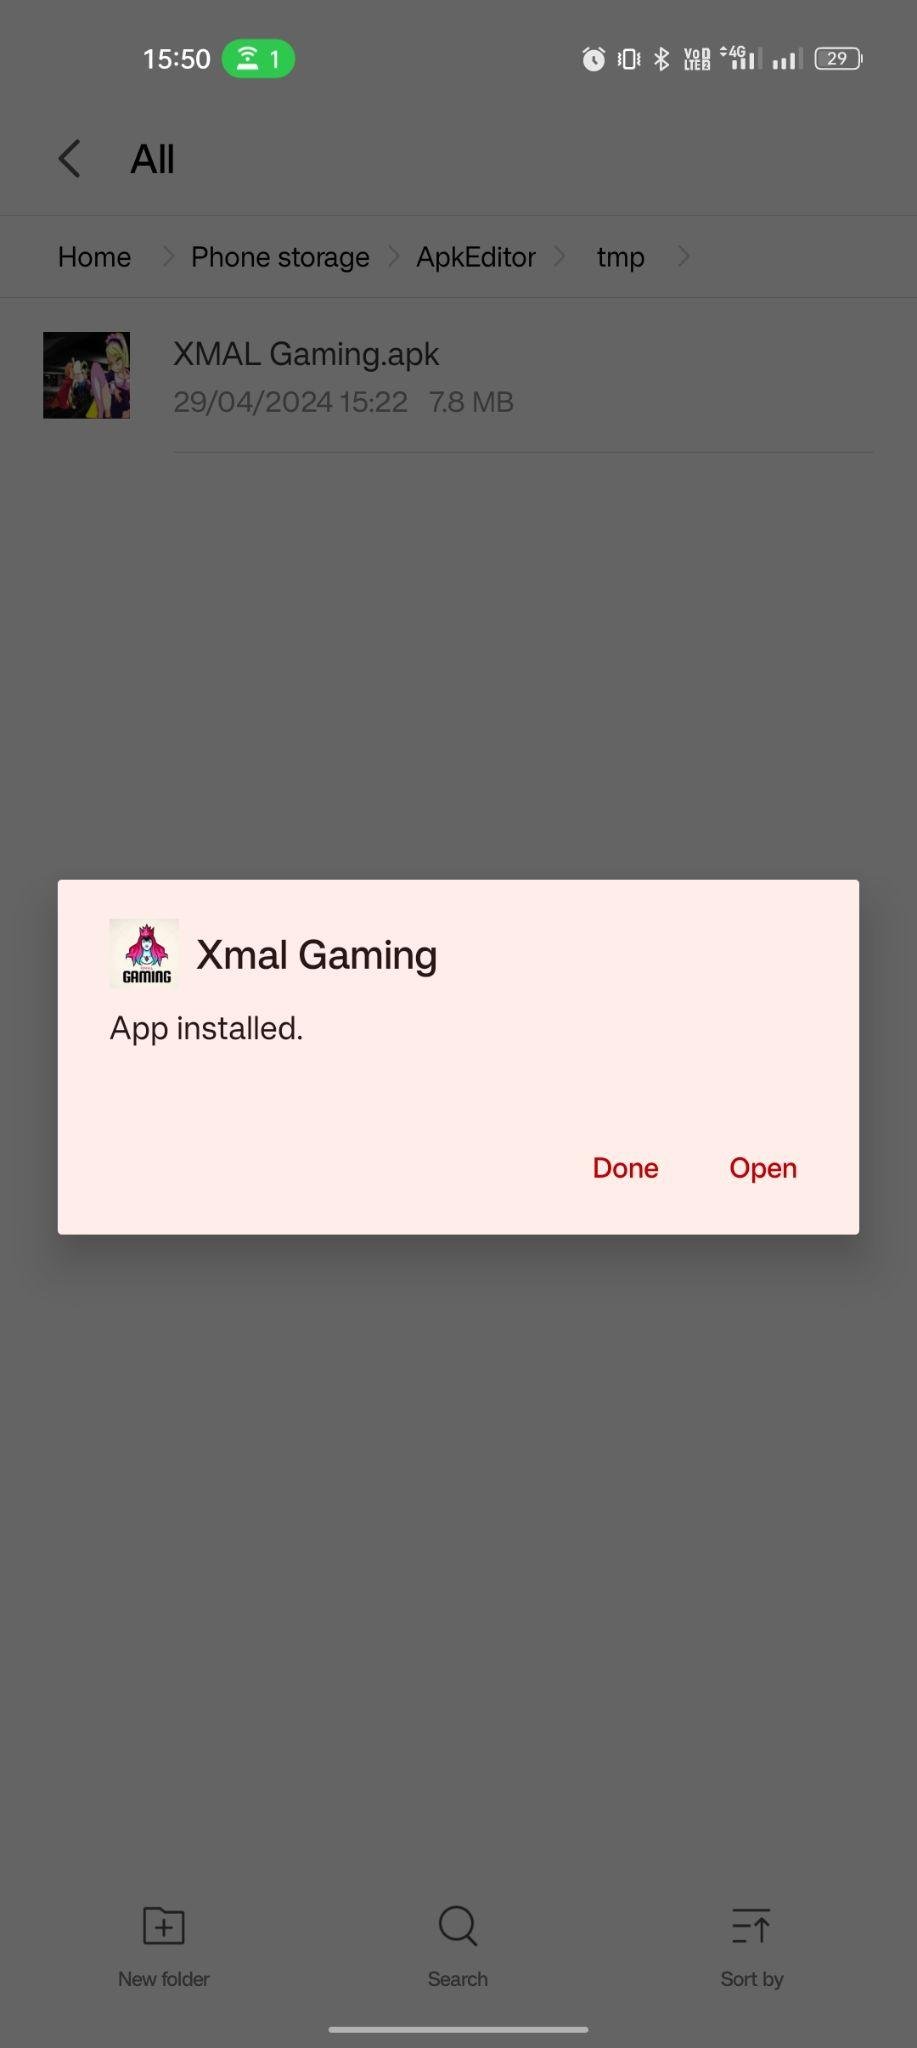 XMAL Gaming apk installed